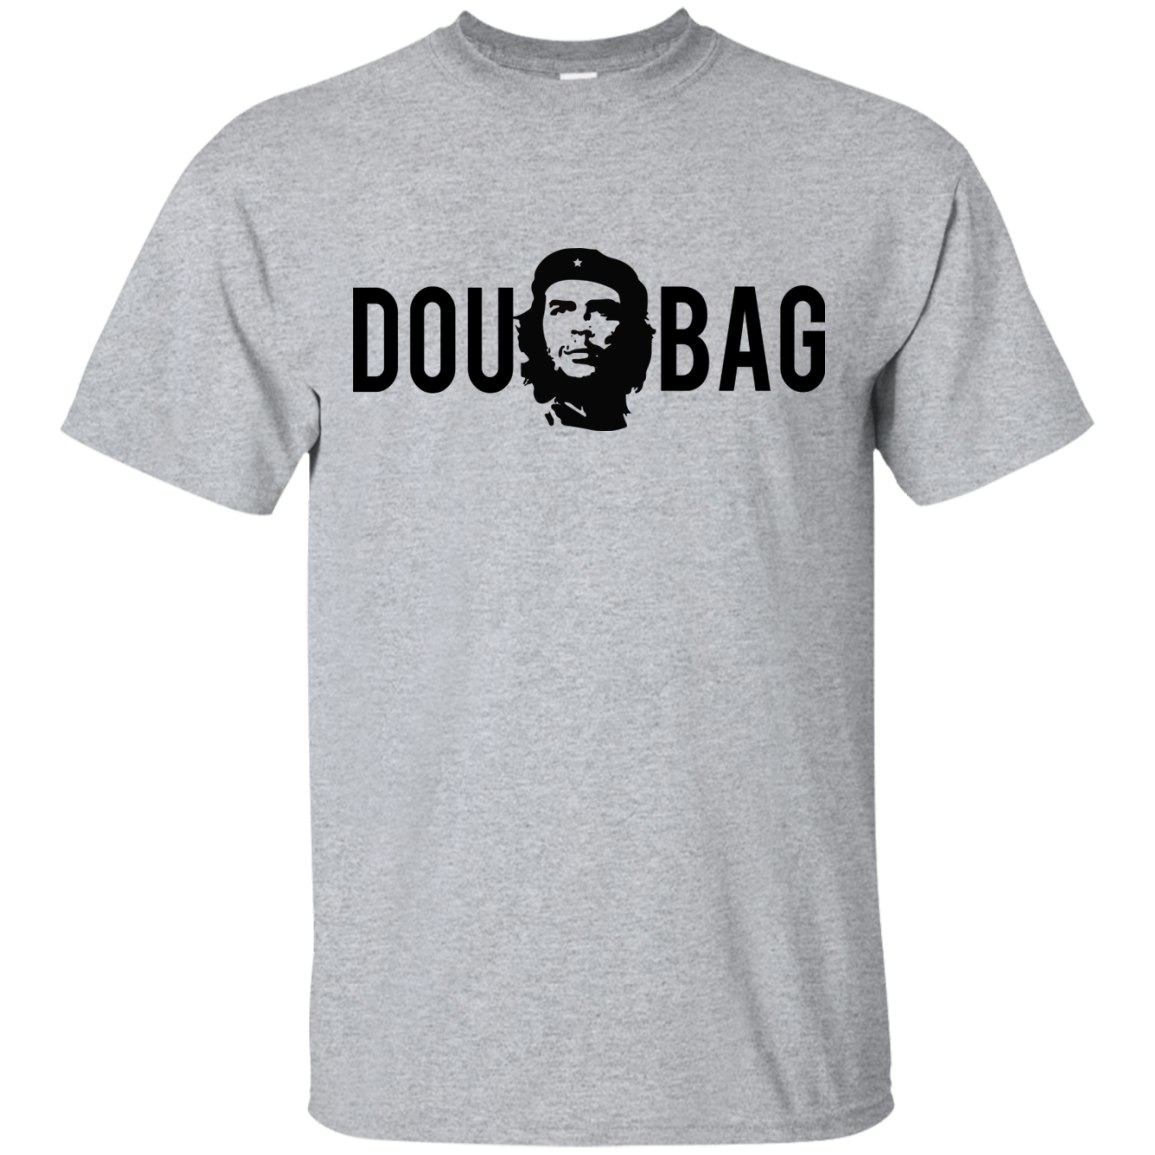 Douche Bag Neck T-Shirt PNG HD Quality